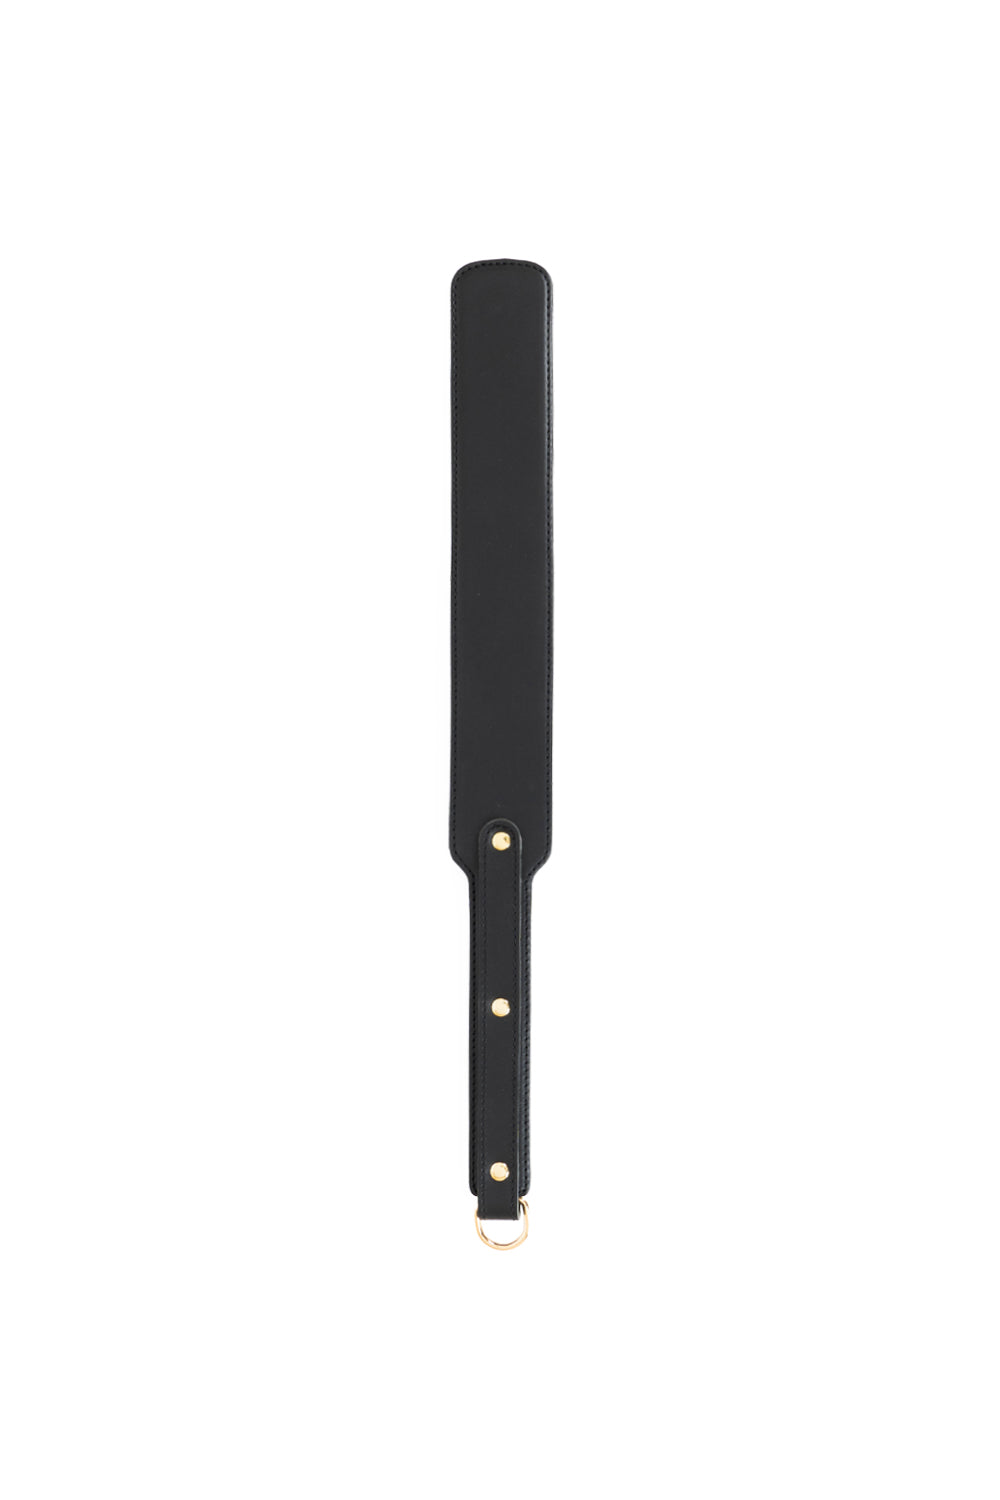 BDSM spanking paddle. Long size. 10 colors